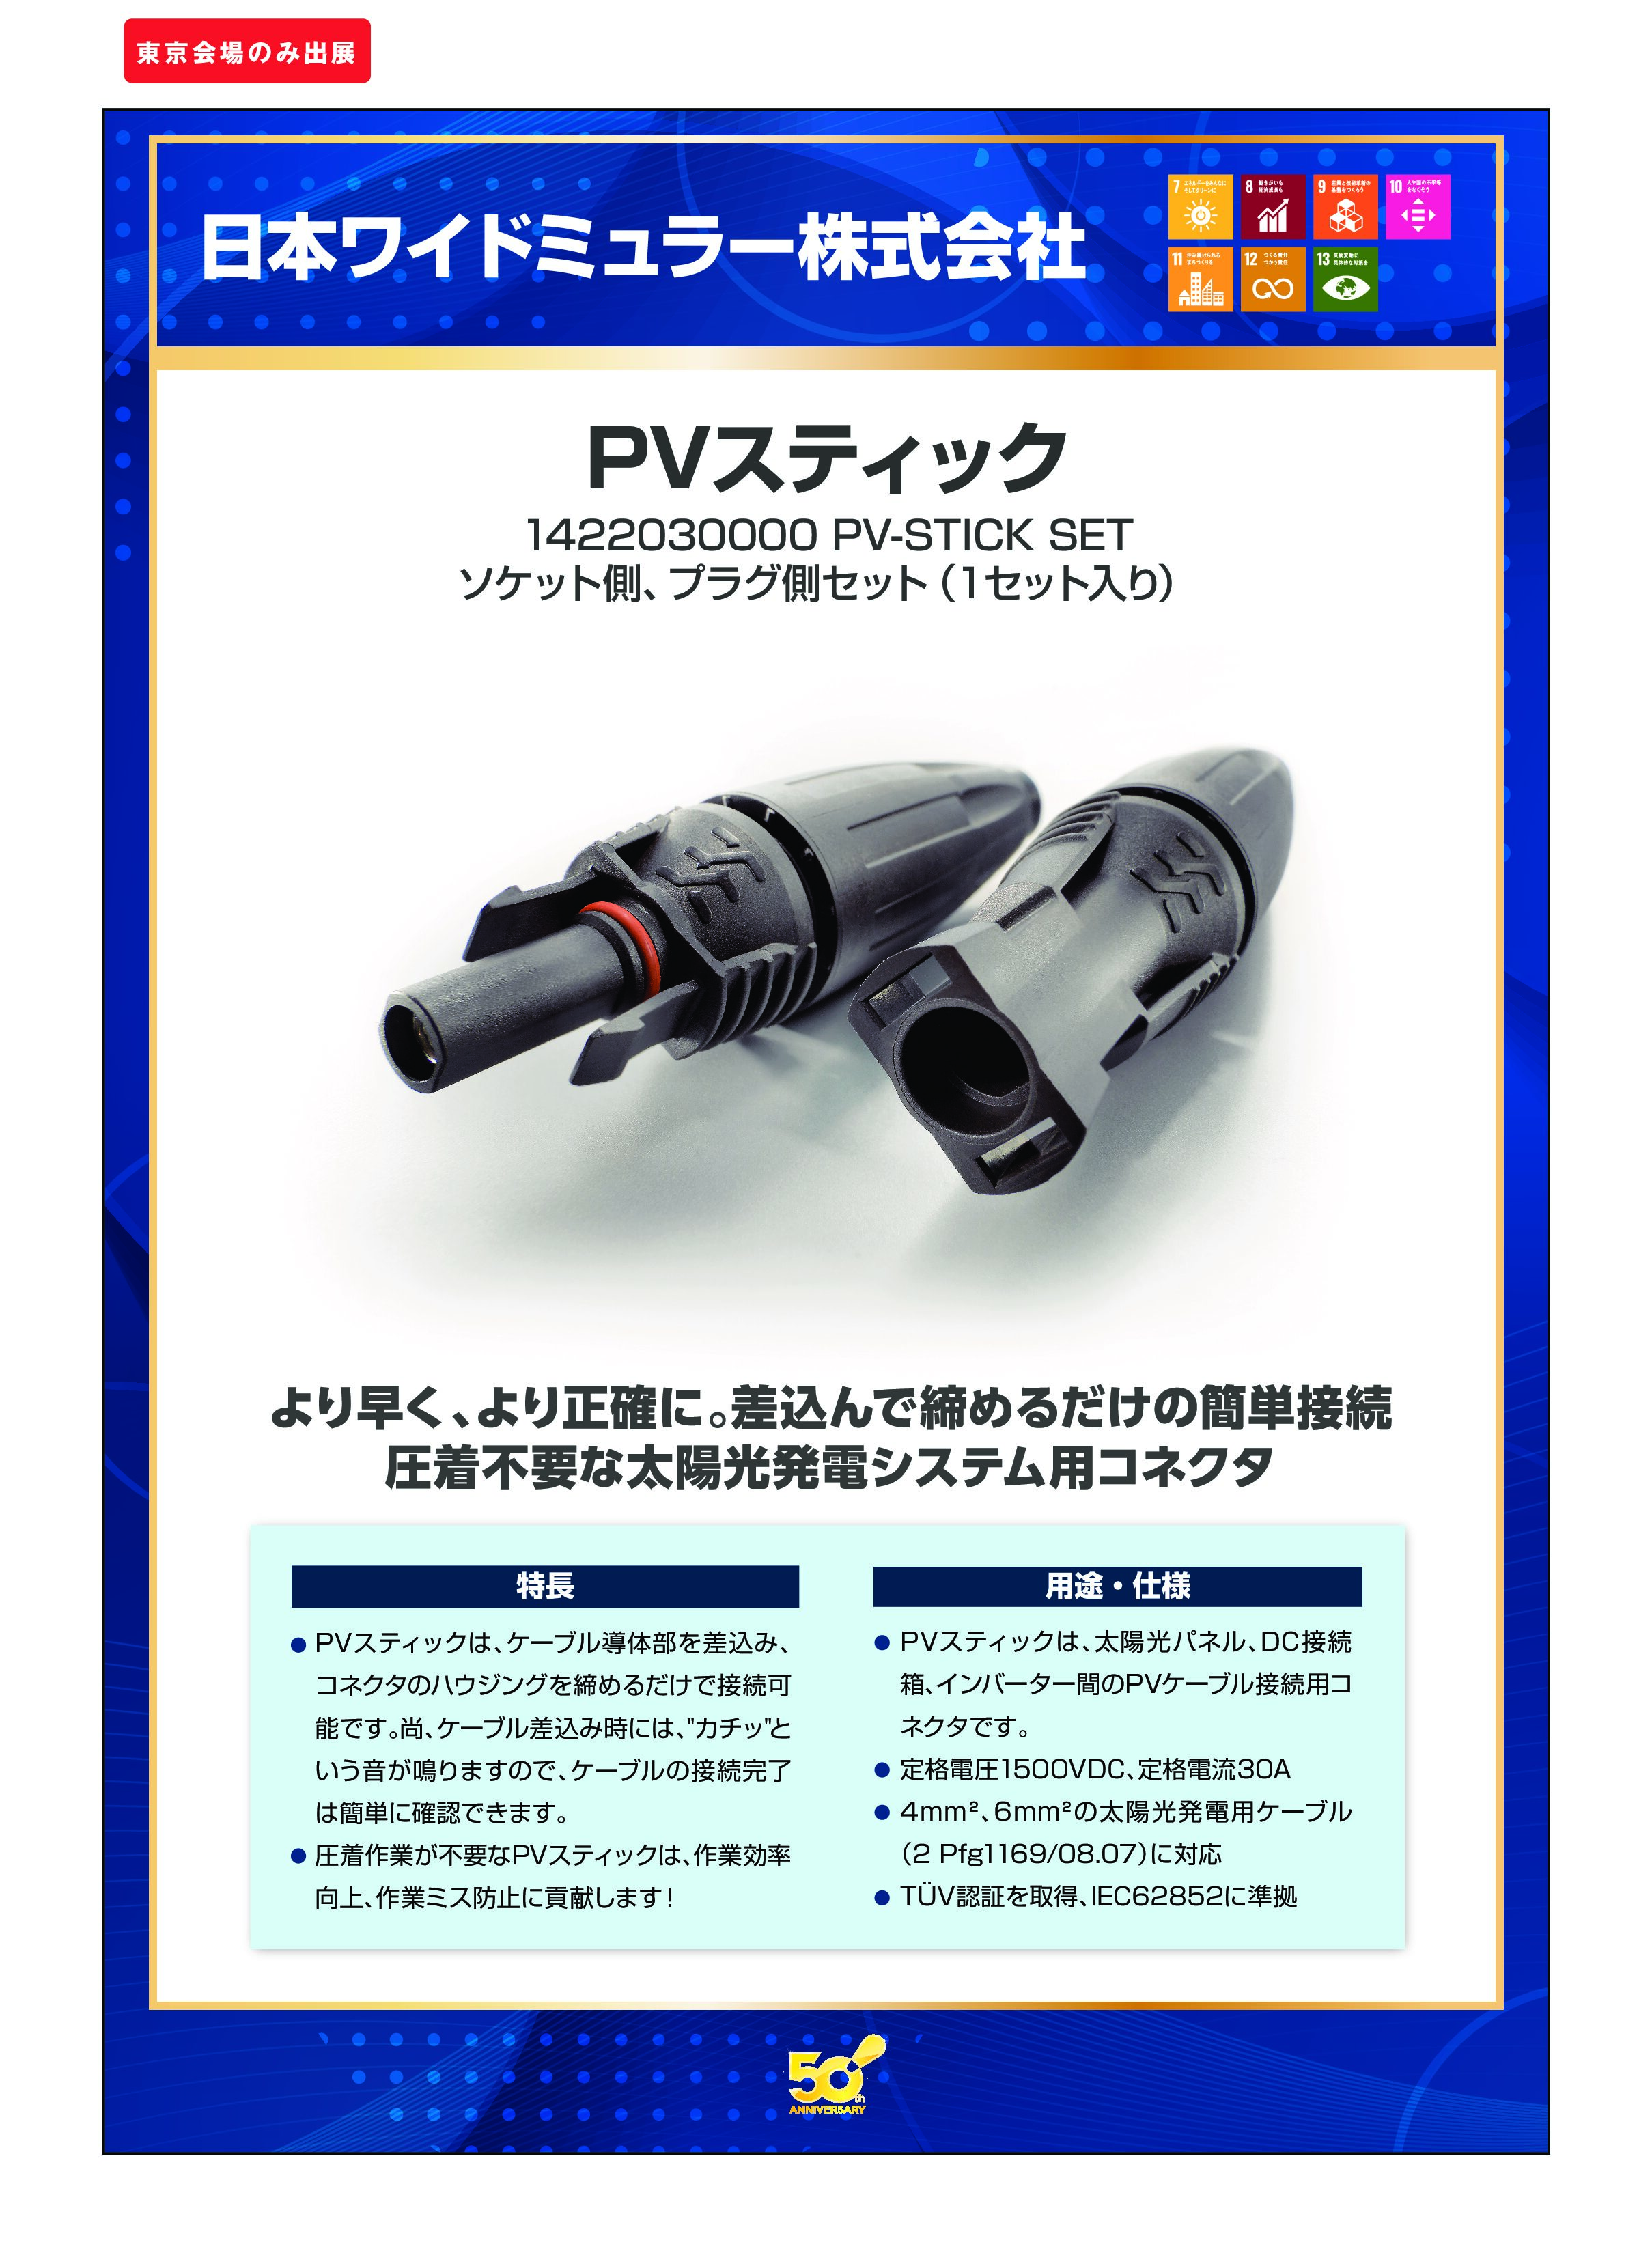 「PVスティック」日本ワイドミュラー株式会社の画像